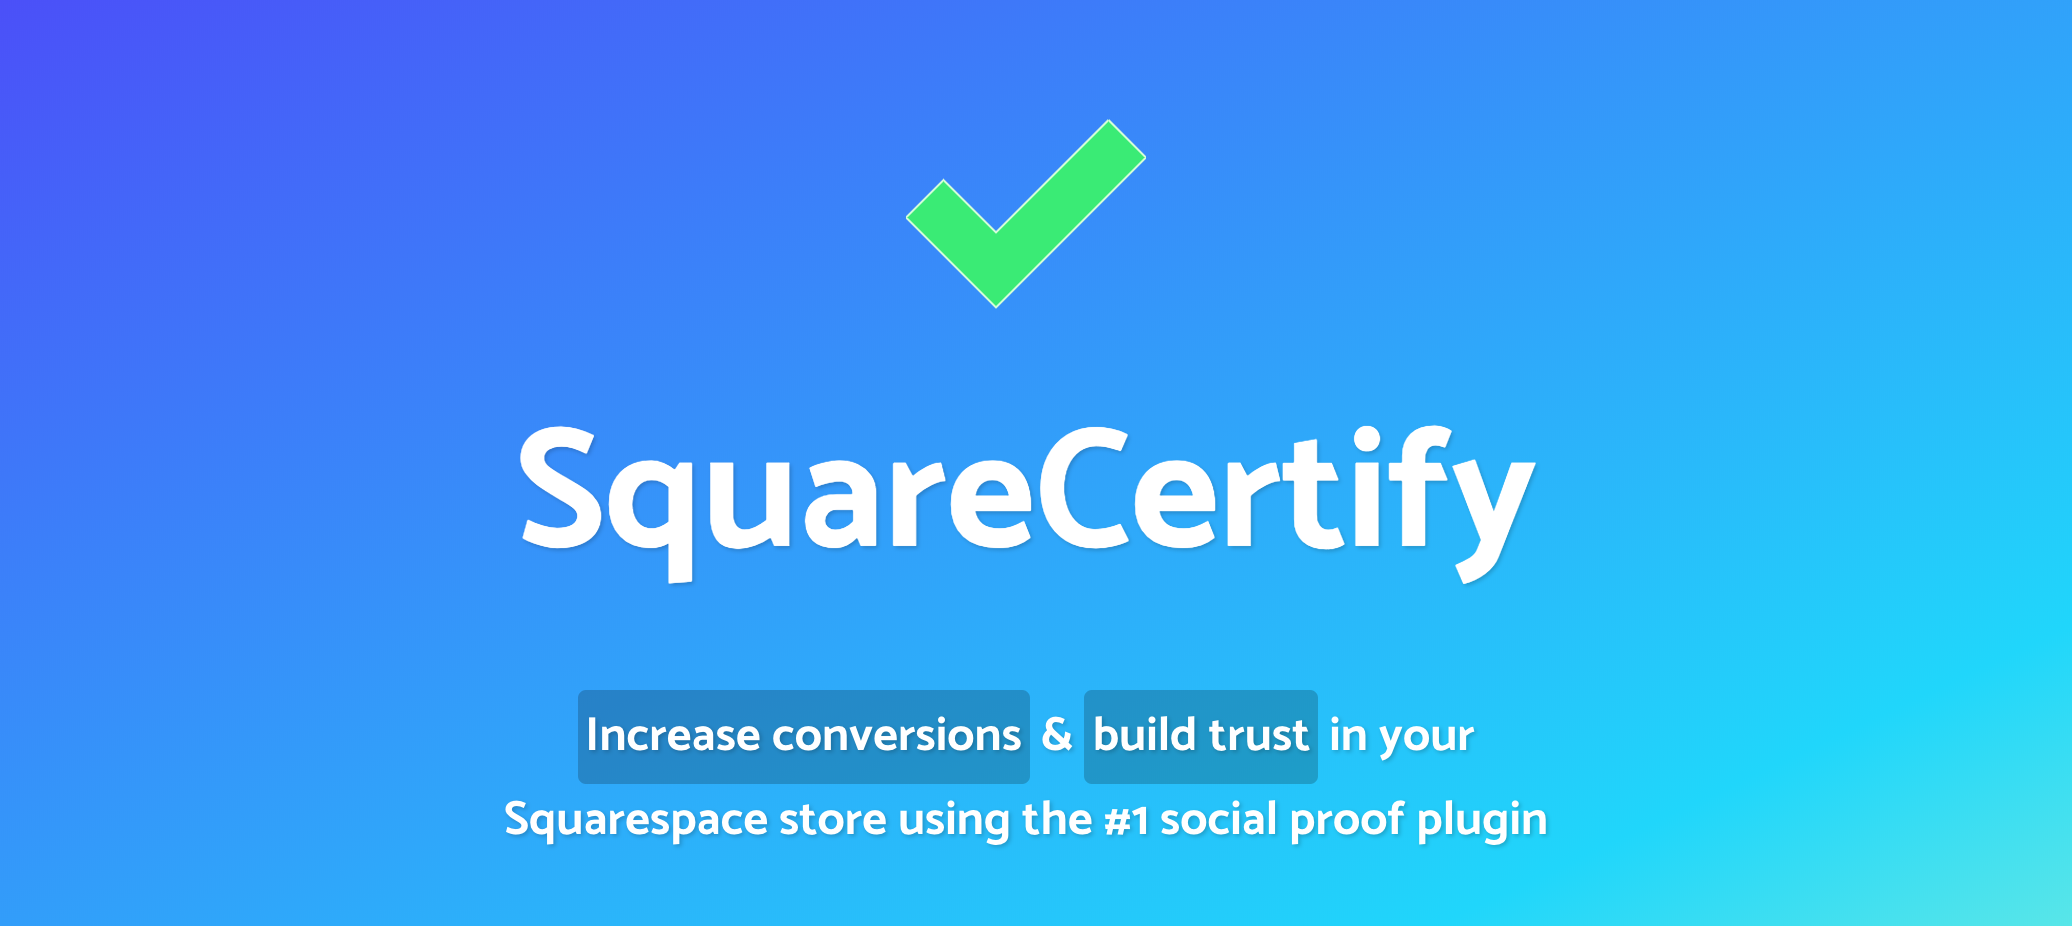 SquareCertify social proof widget